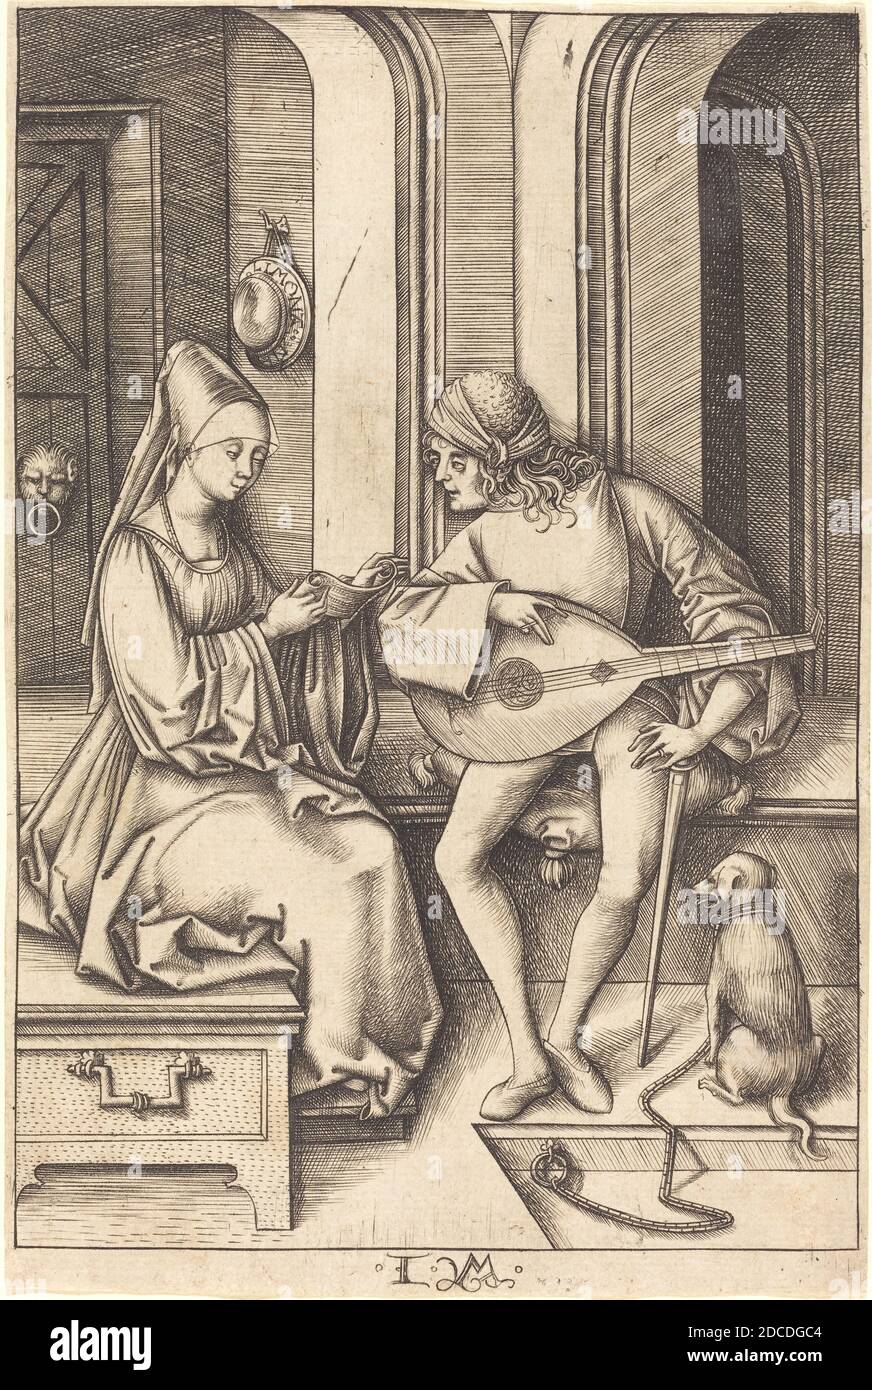 Israhel van Meckenem, (artist), German, c. 1445 - 1503, The Lute Player and the Singer, Scenes of Daily Life, (series), c. 1495/1503, engraving Stock Photo